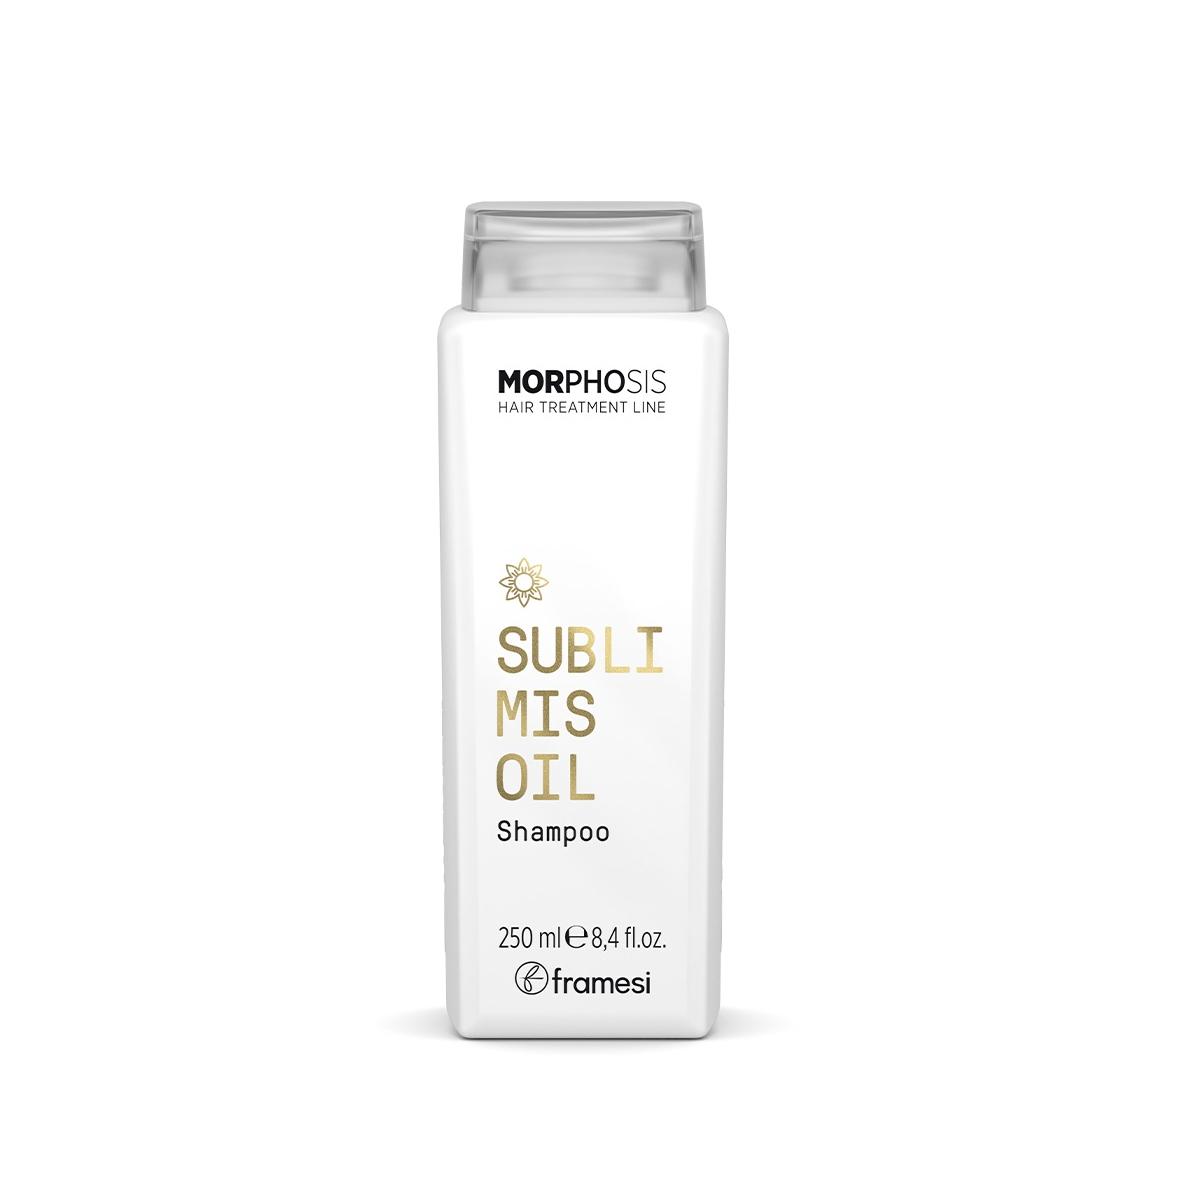 Framesi Morphosis Hair Treatment Line Sublmis Oil Shampoo 250 ml